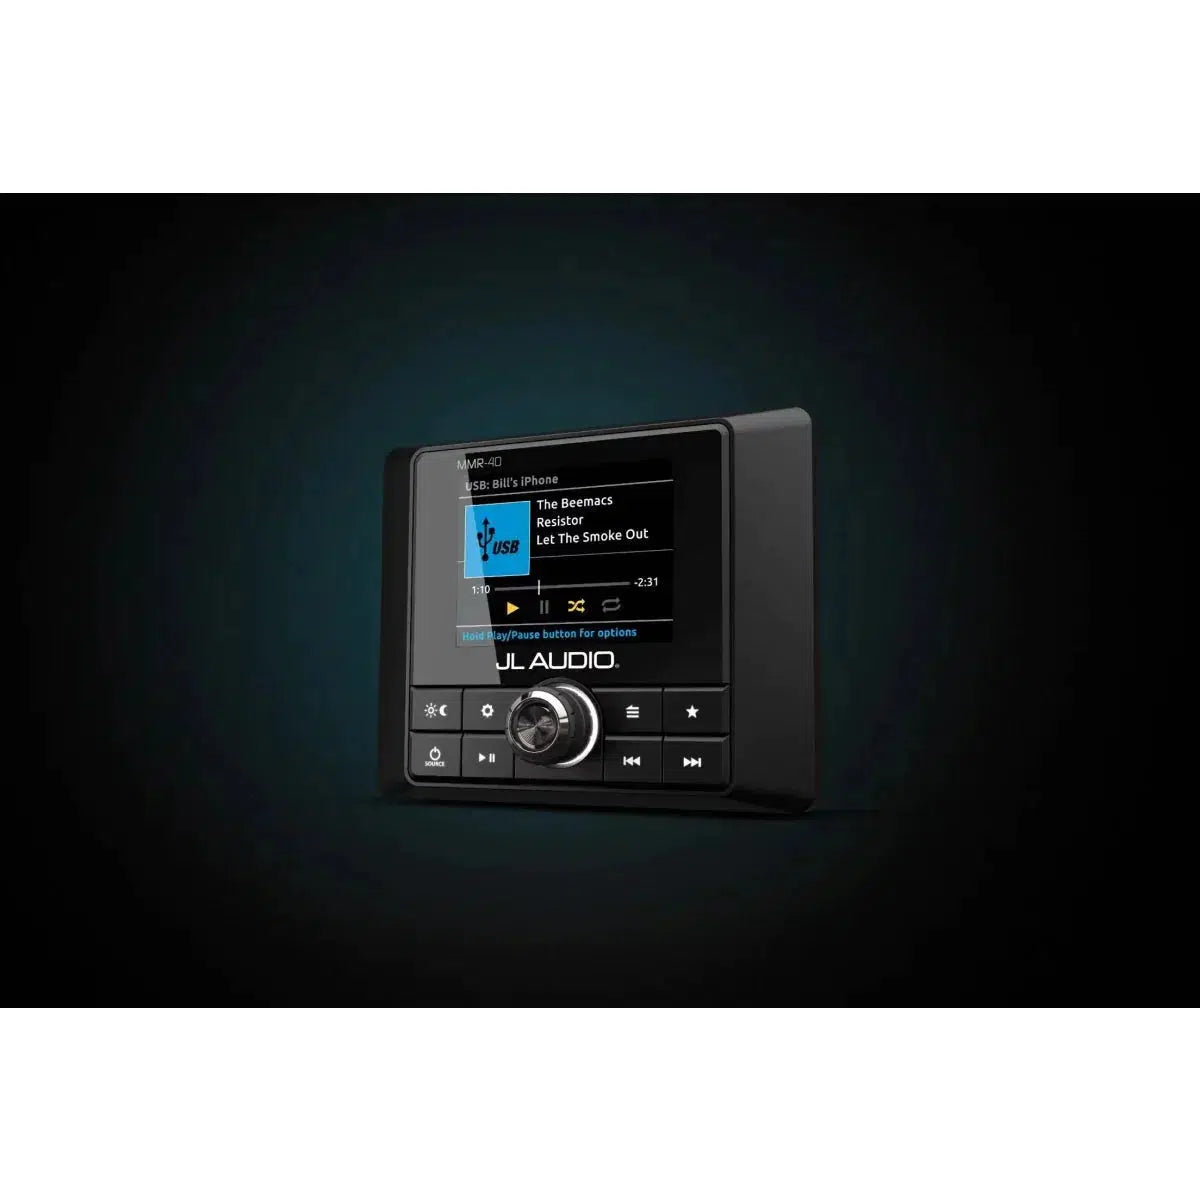 JL Audio-MMR-40-Multi-Media-Receiver Accessories-Masori.co.uk